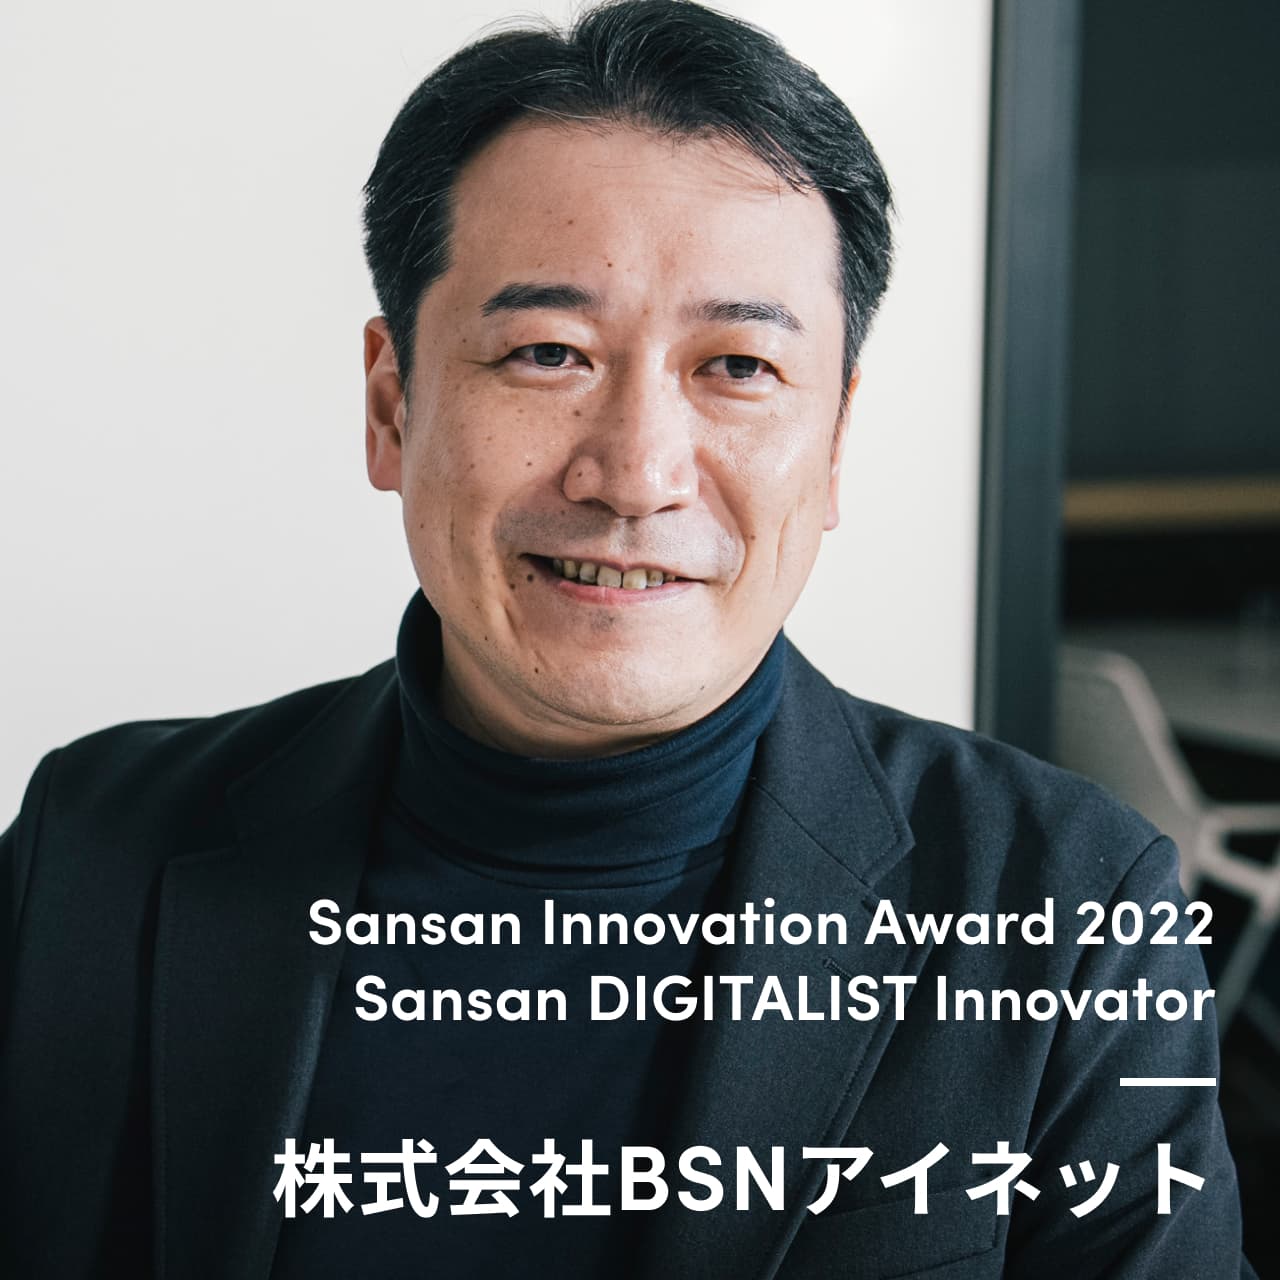 Sansan DIGITALIST Innovator 株式会社BSNアイネット